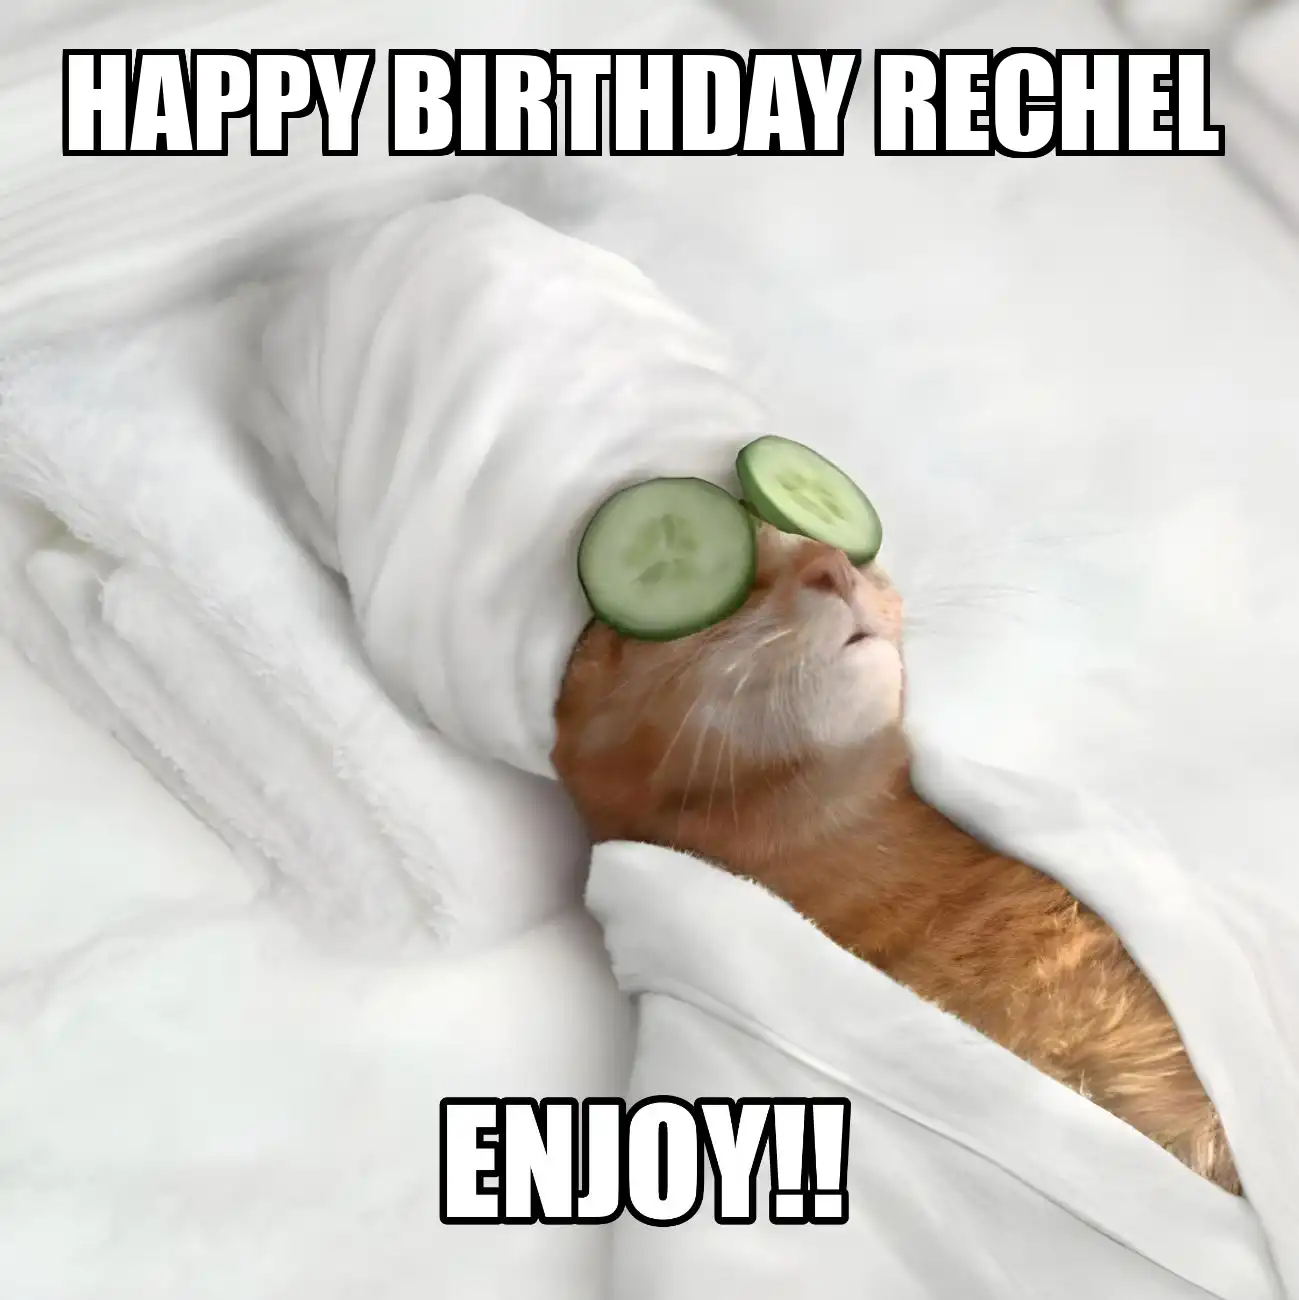 Happy Birthday Rechel Enjoy Cat Meme